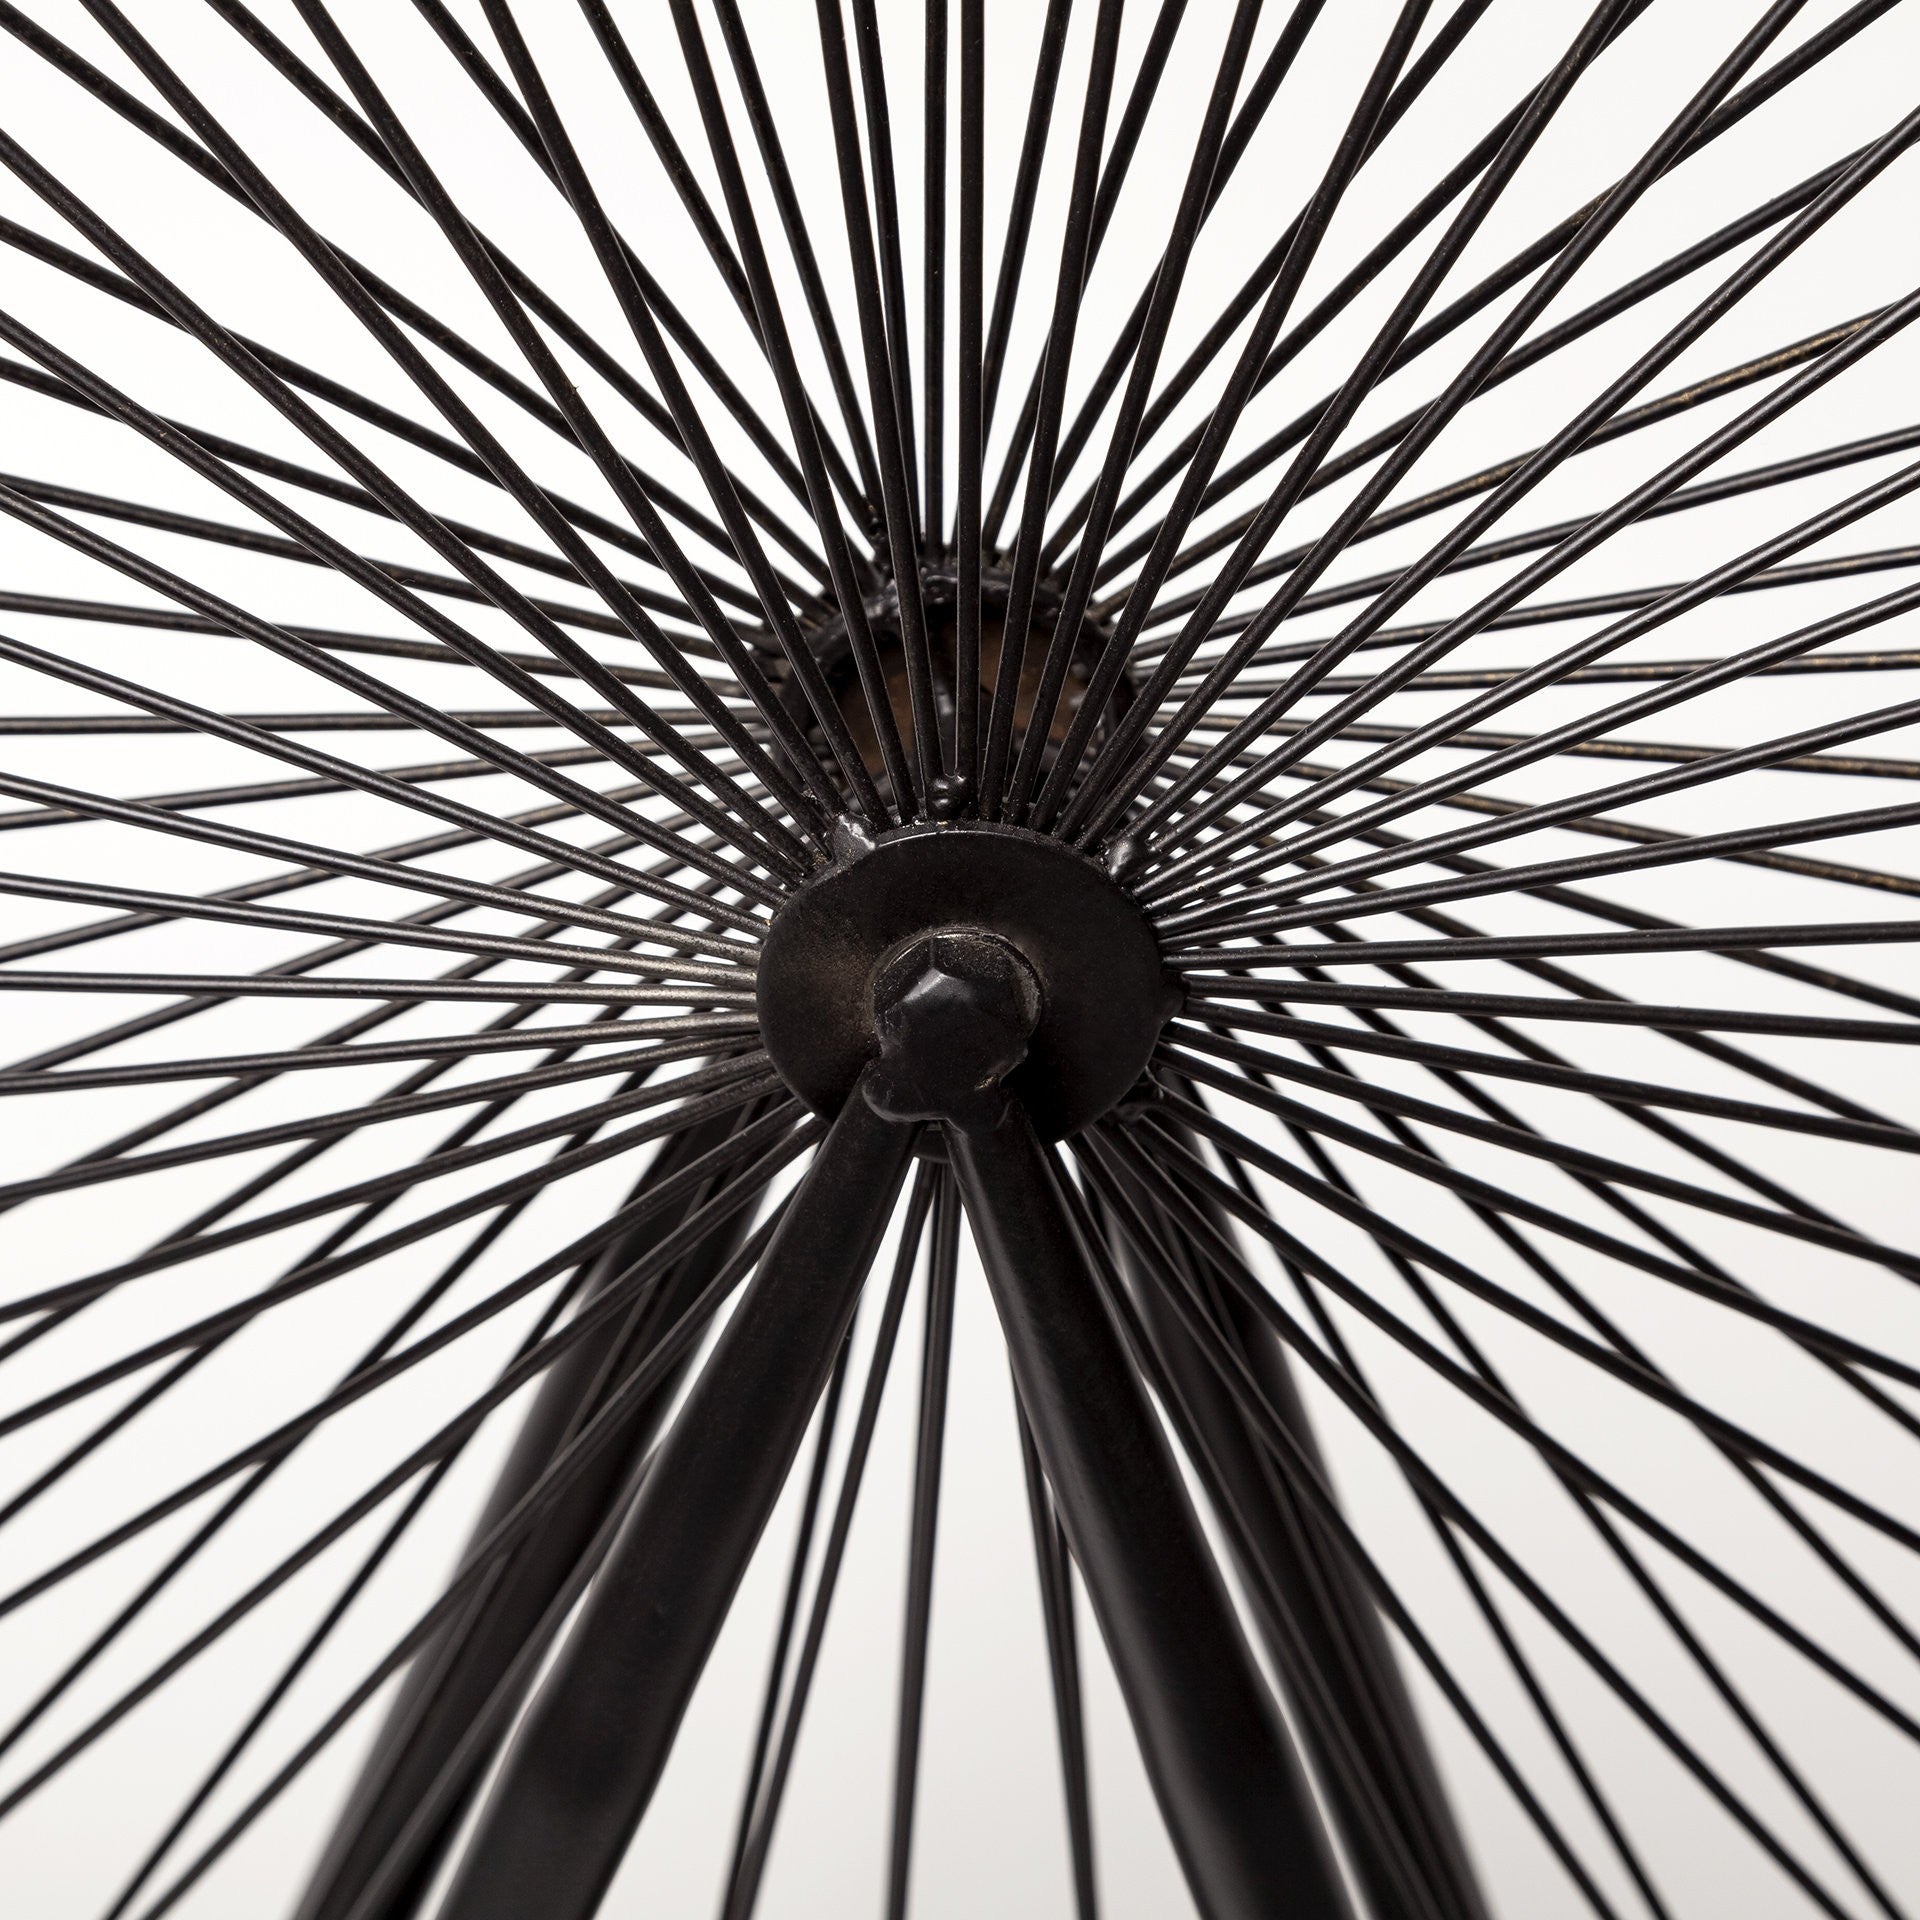 Black Metal London Eye Sculpture